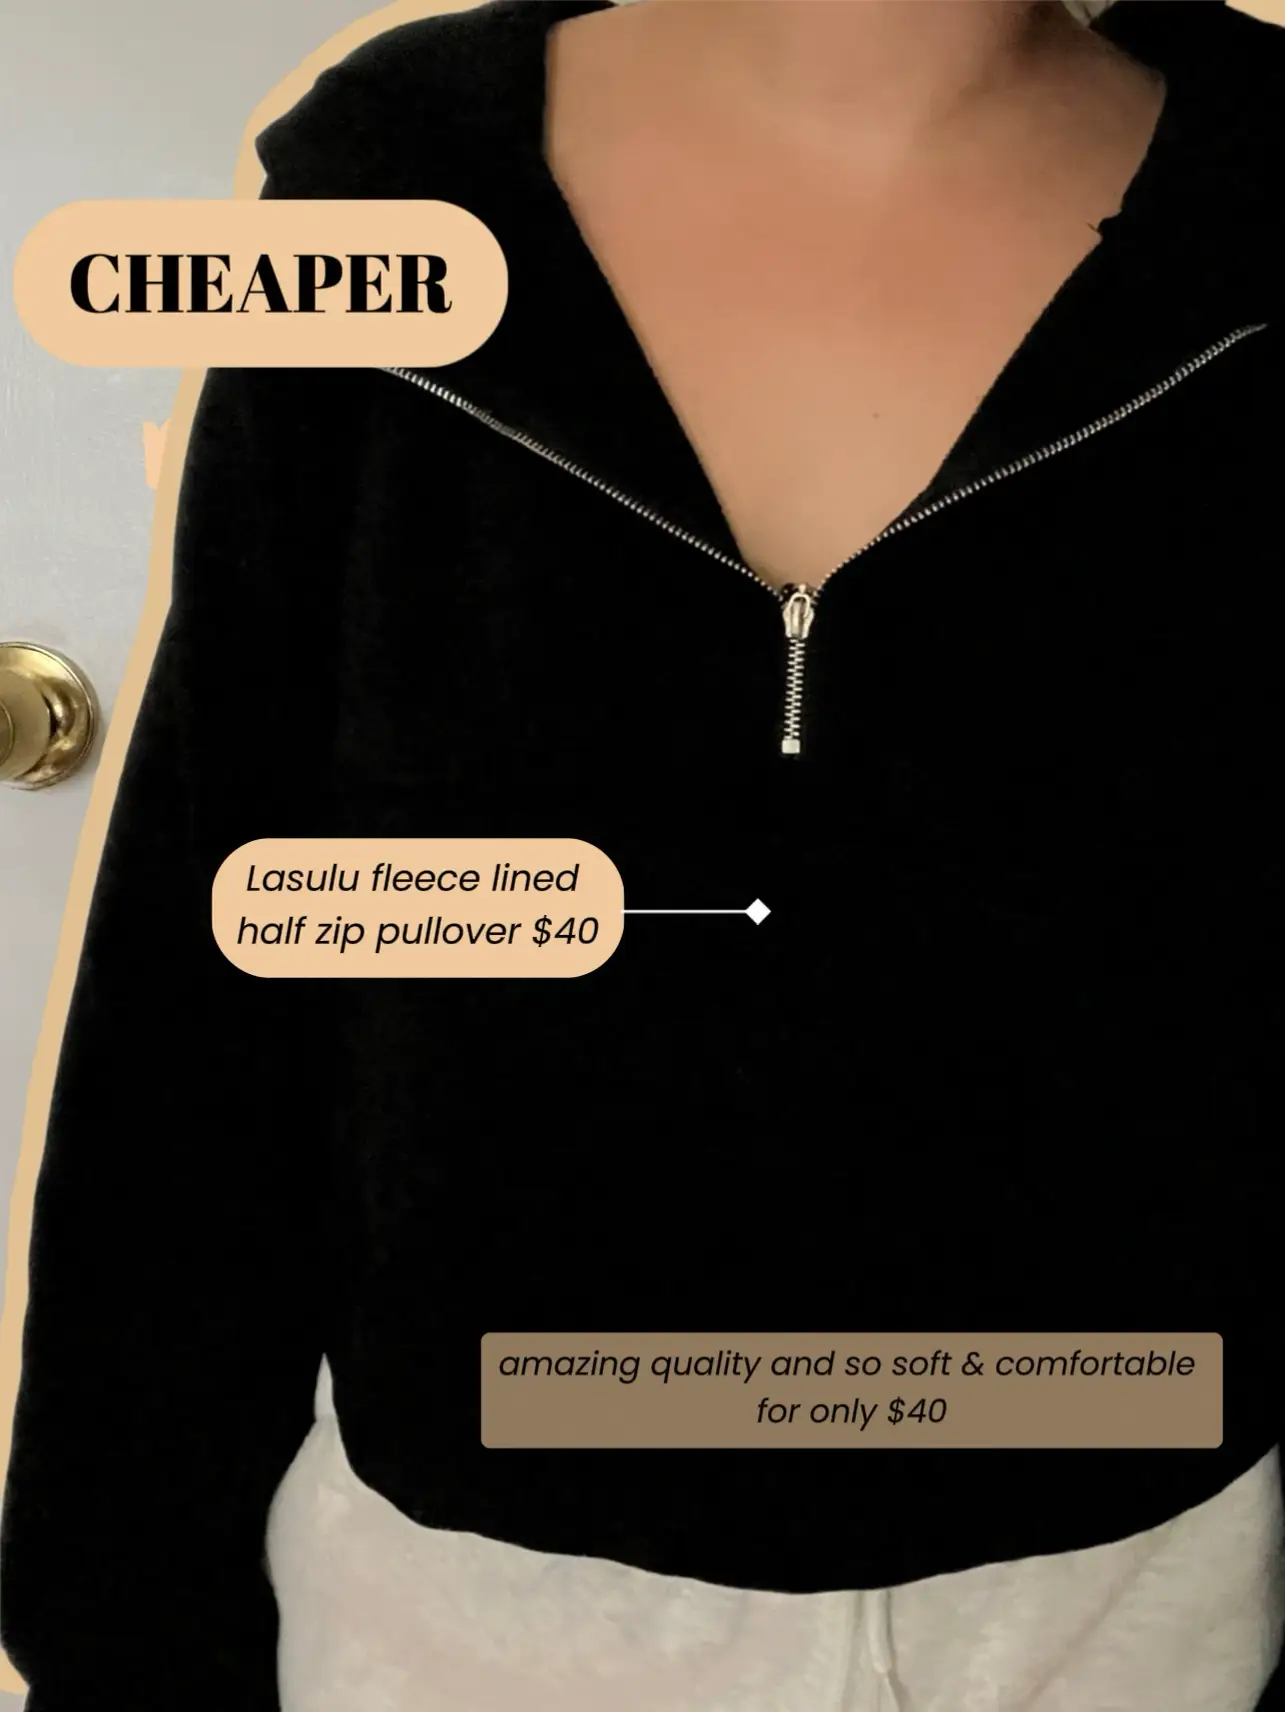 1/2 zip scuba hoodie dupe? budget friendly option, if you like the